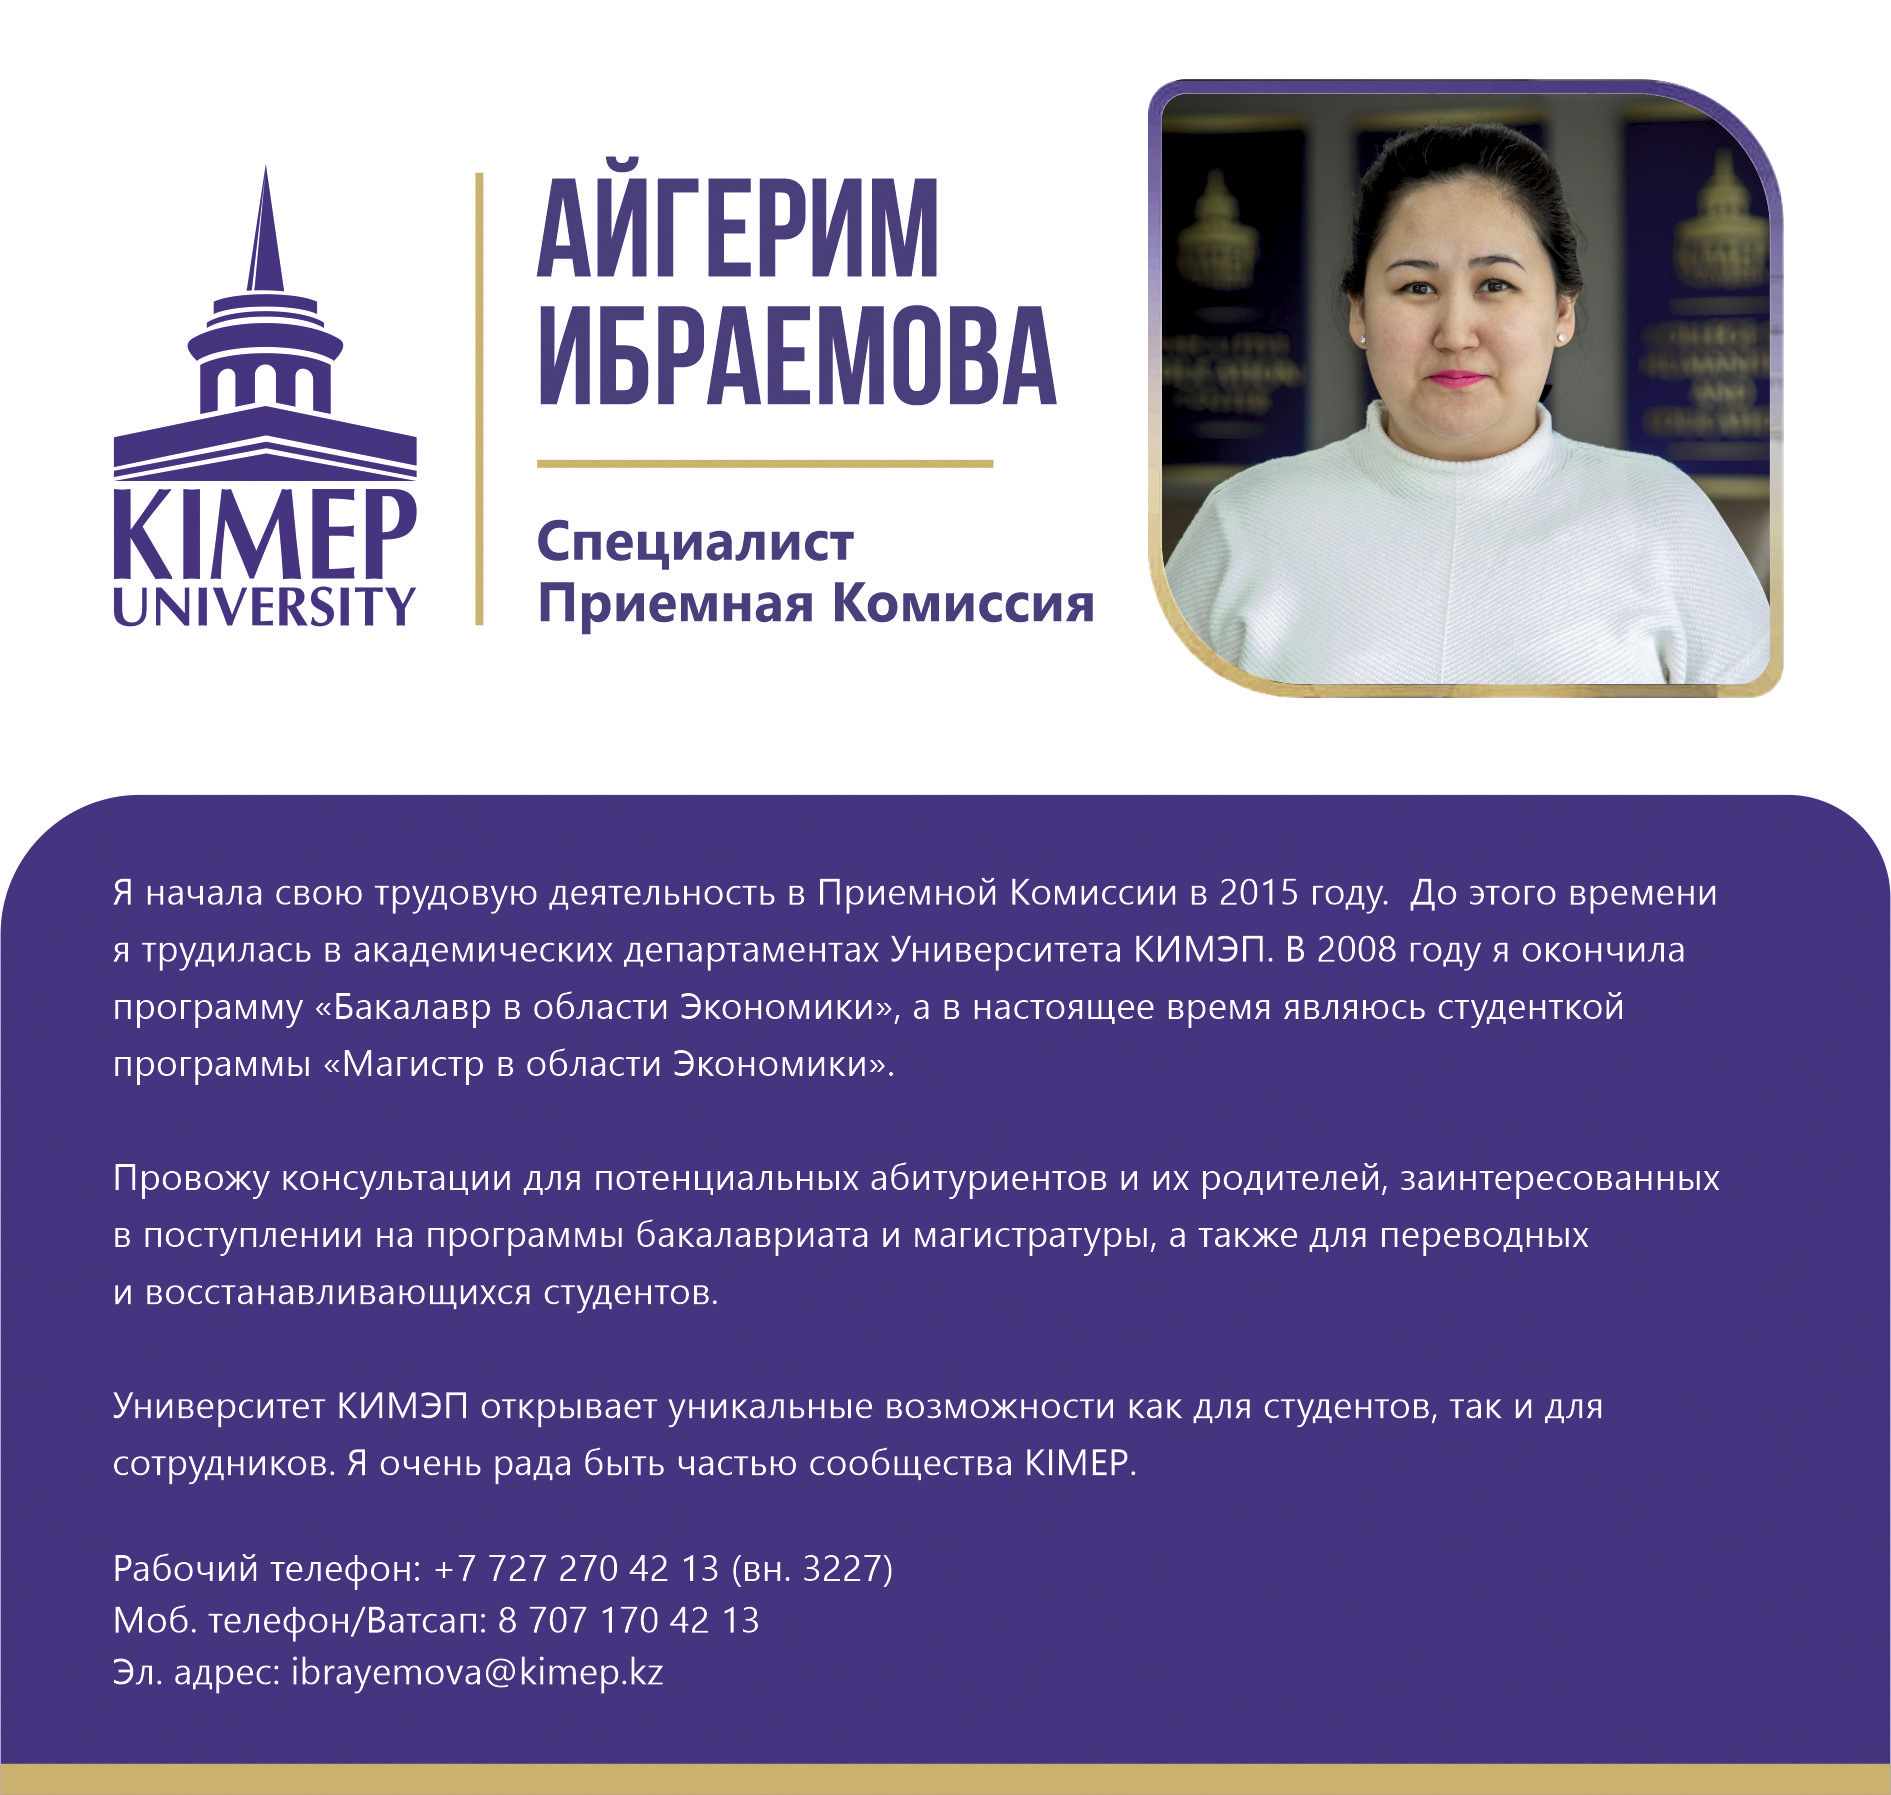 Admission Profile for Aigerim Ibrayemova rus